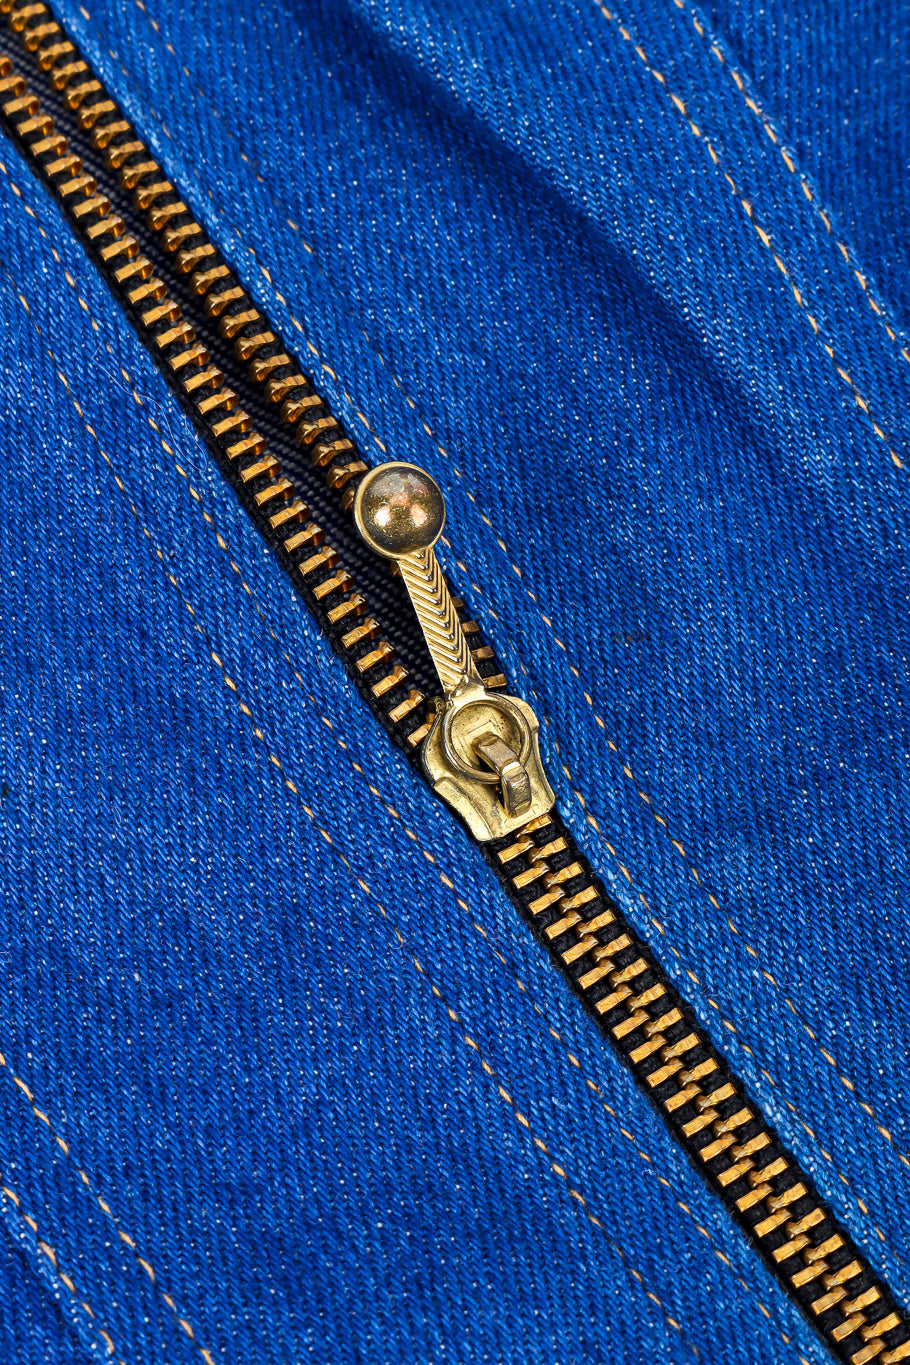 Vintage Lillie Rubin Crystal Studded Denim Jacket front zipper closeup @Recessla